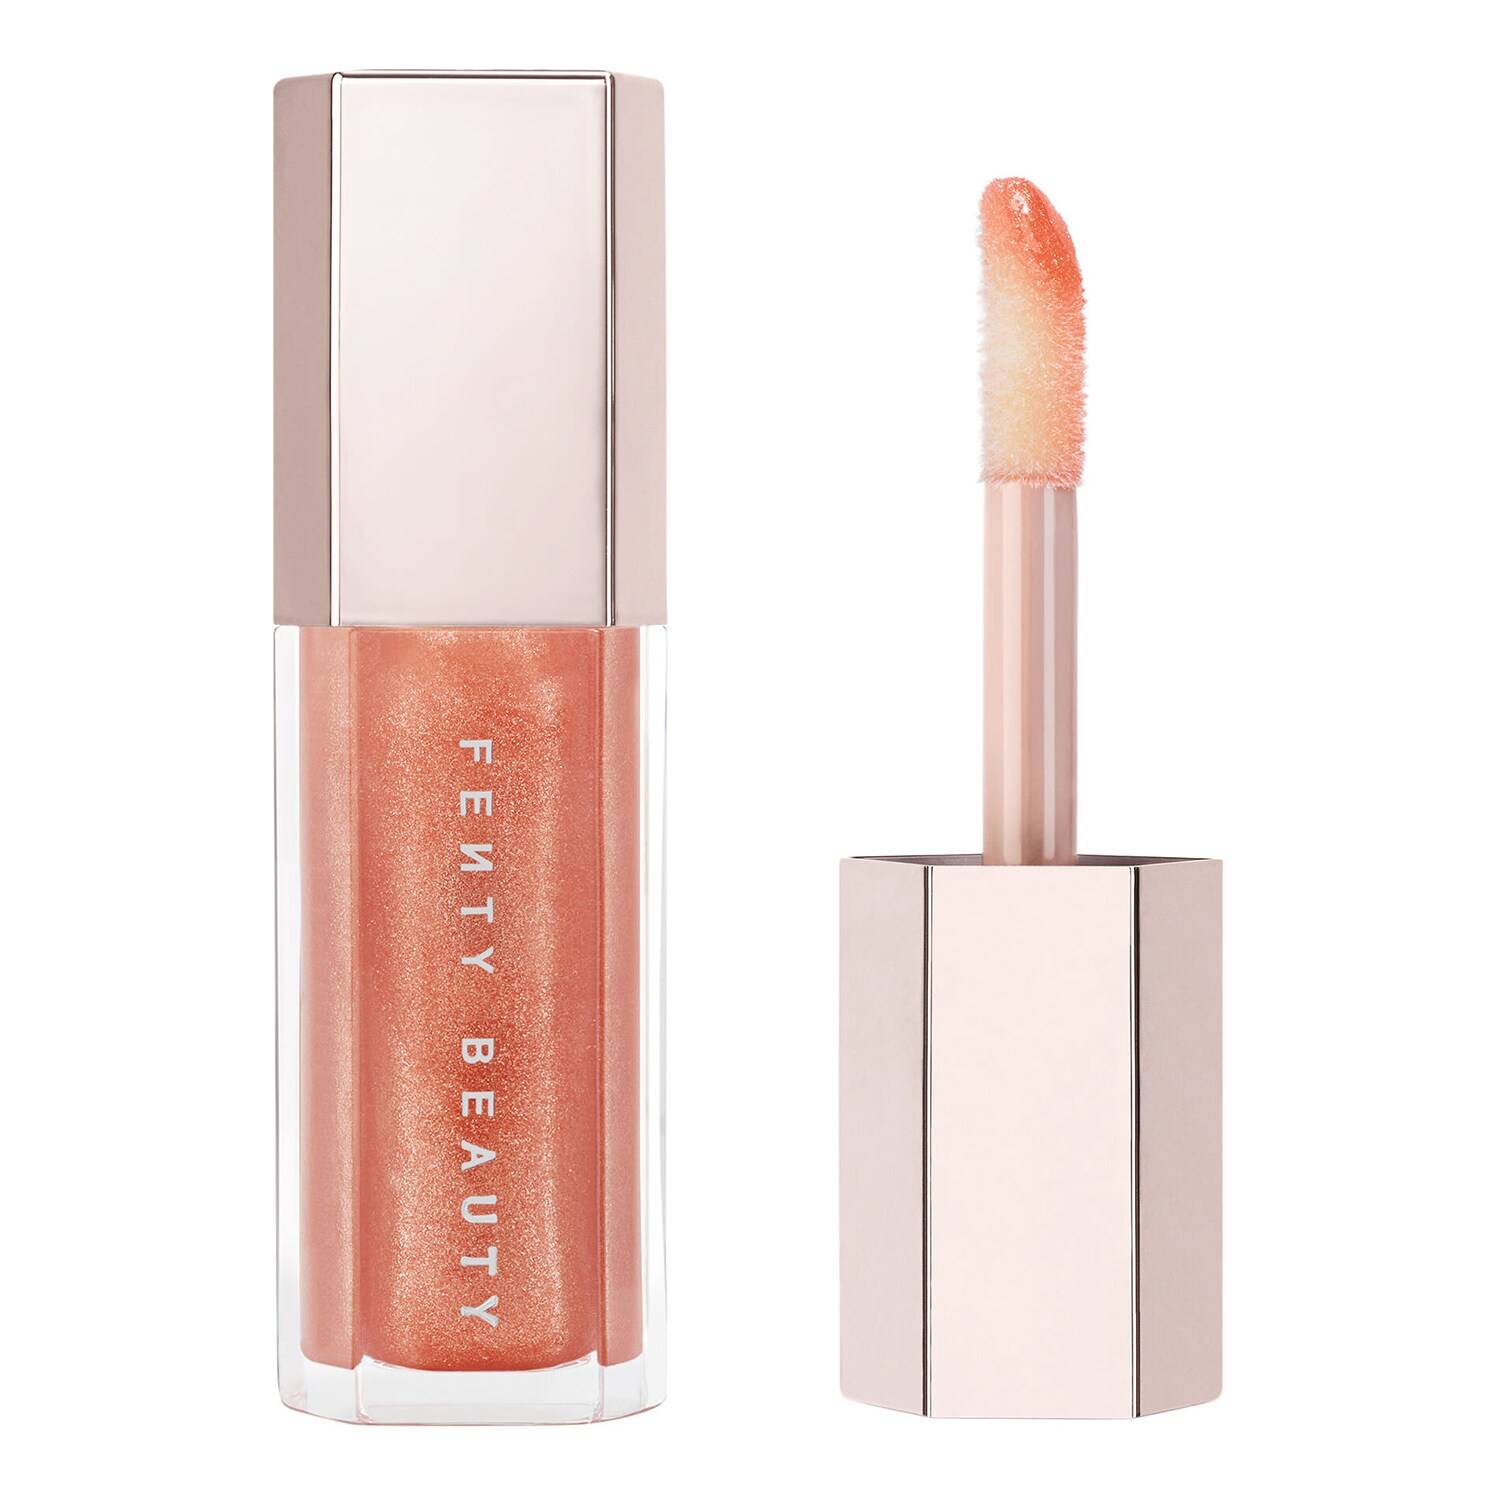 Fenty Beauty Gloss Bomb Lip Luminizer 9Ml Champ Stamp Fantasy - Sephora Exclusive